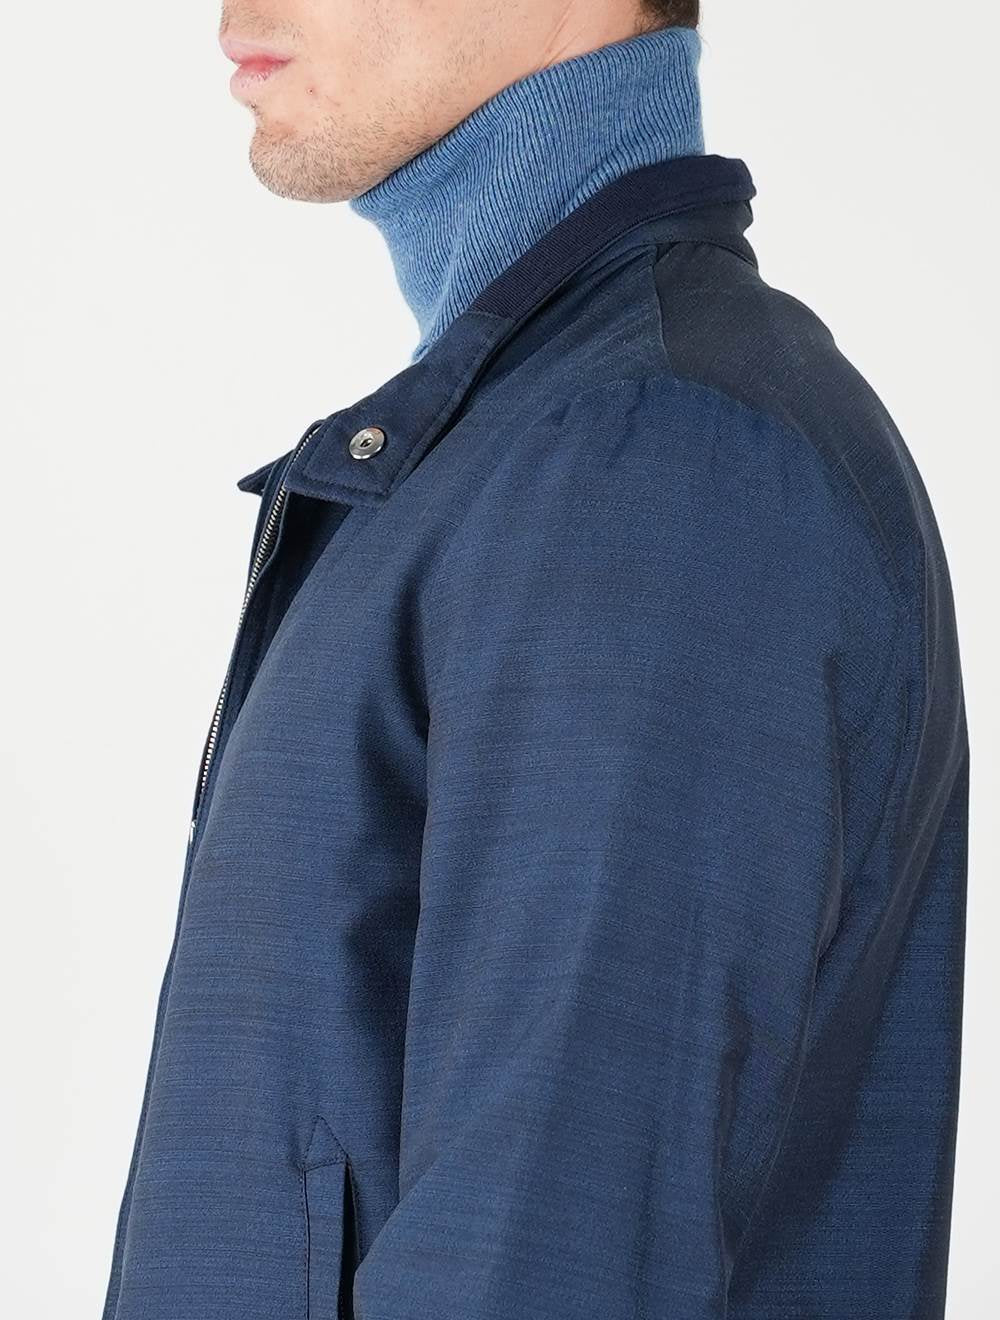 Cesare Attolini blauwe zijden jas